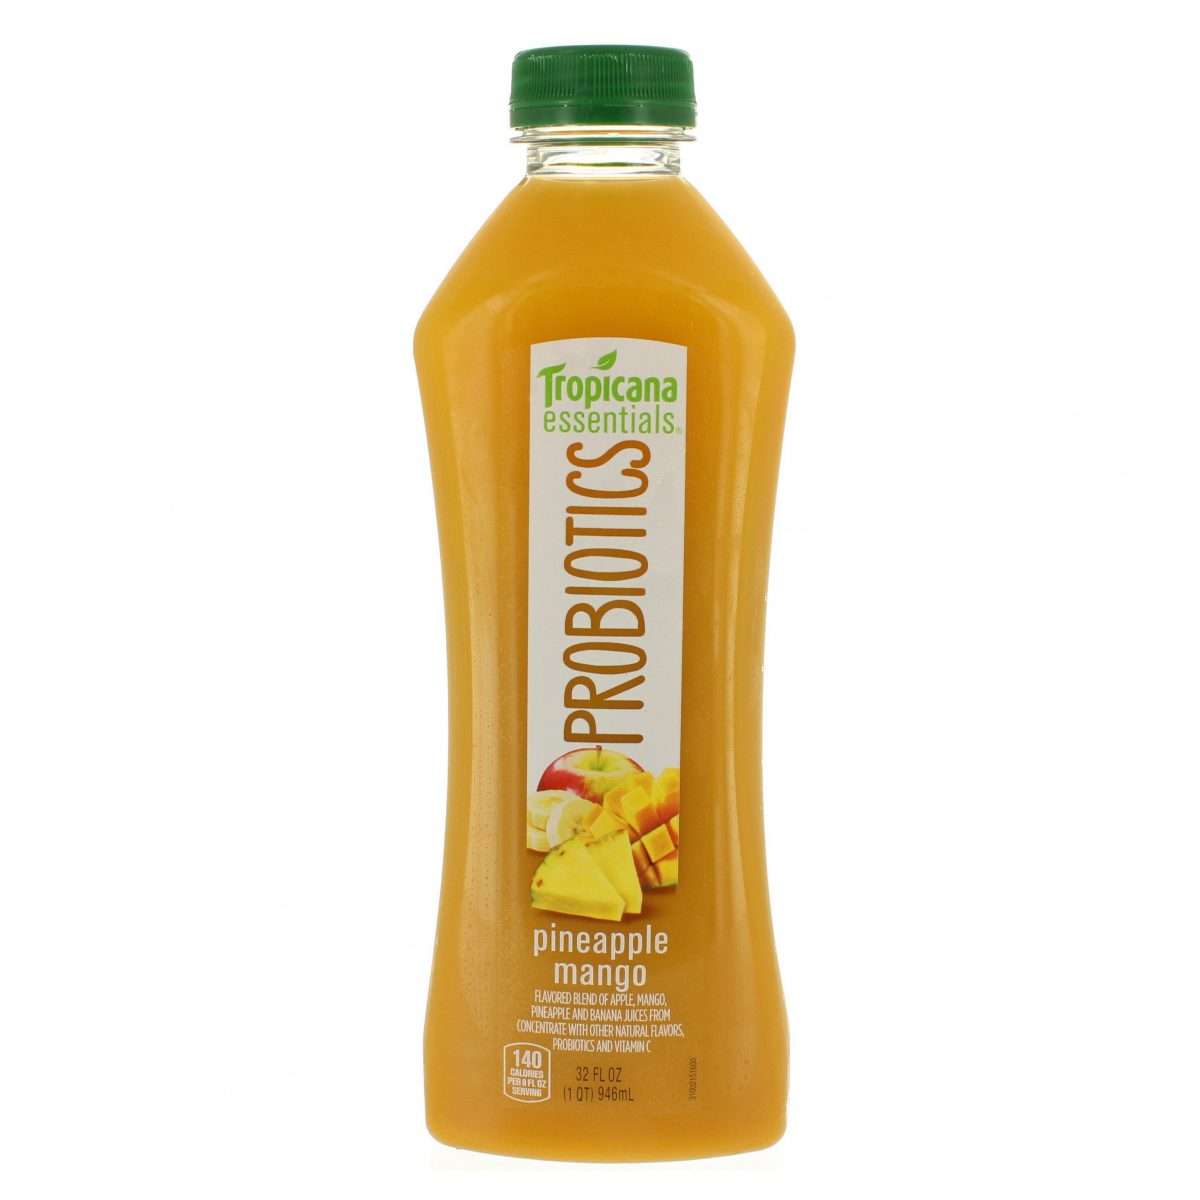 Tropicana Essentials Probiotic Pineapple Mango